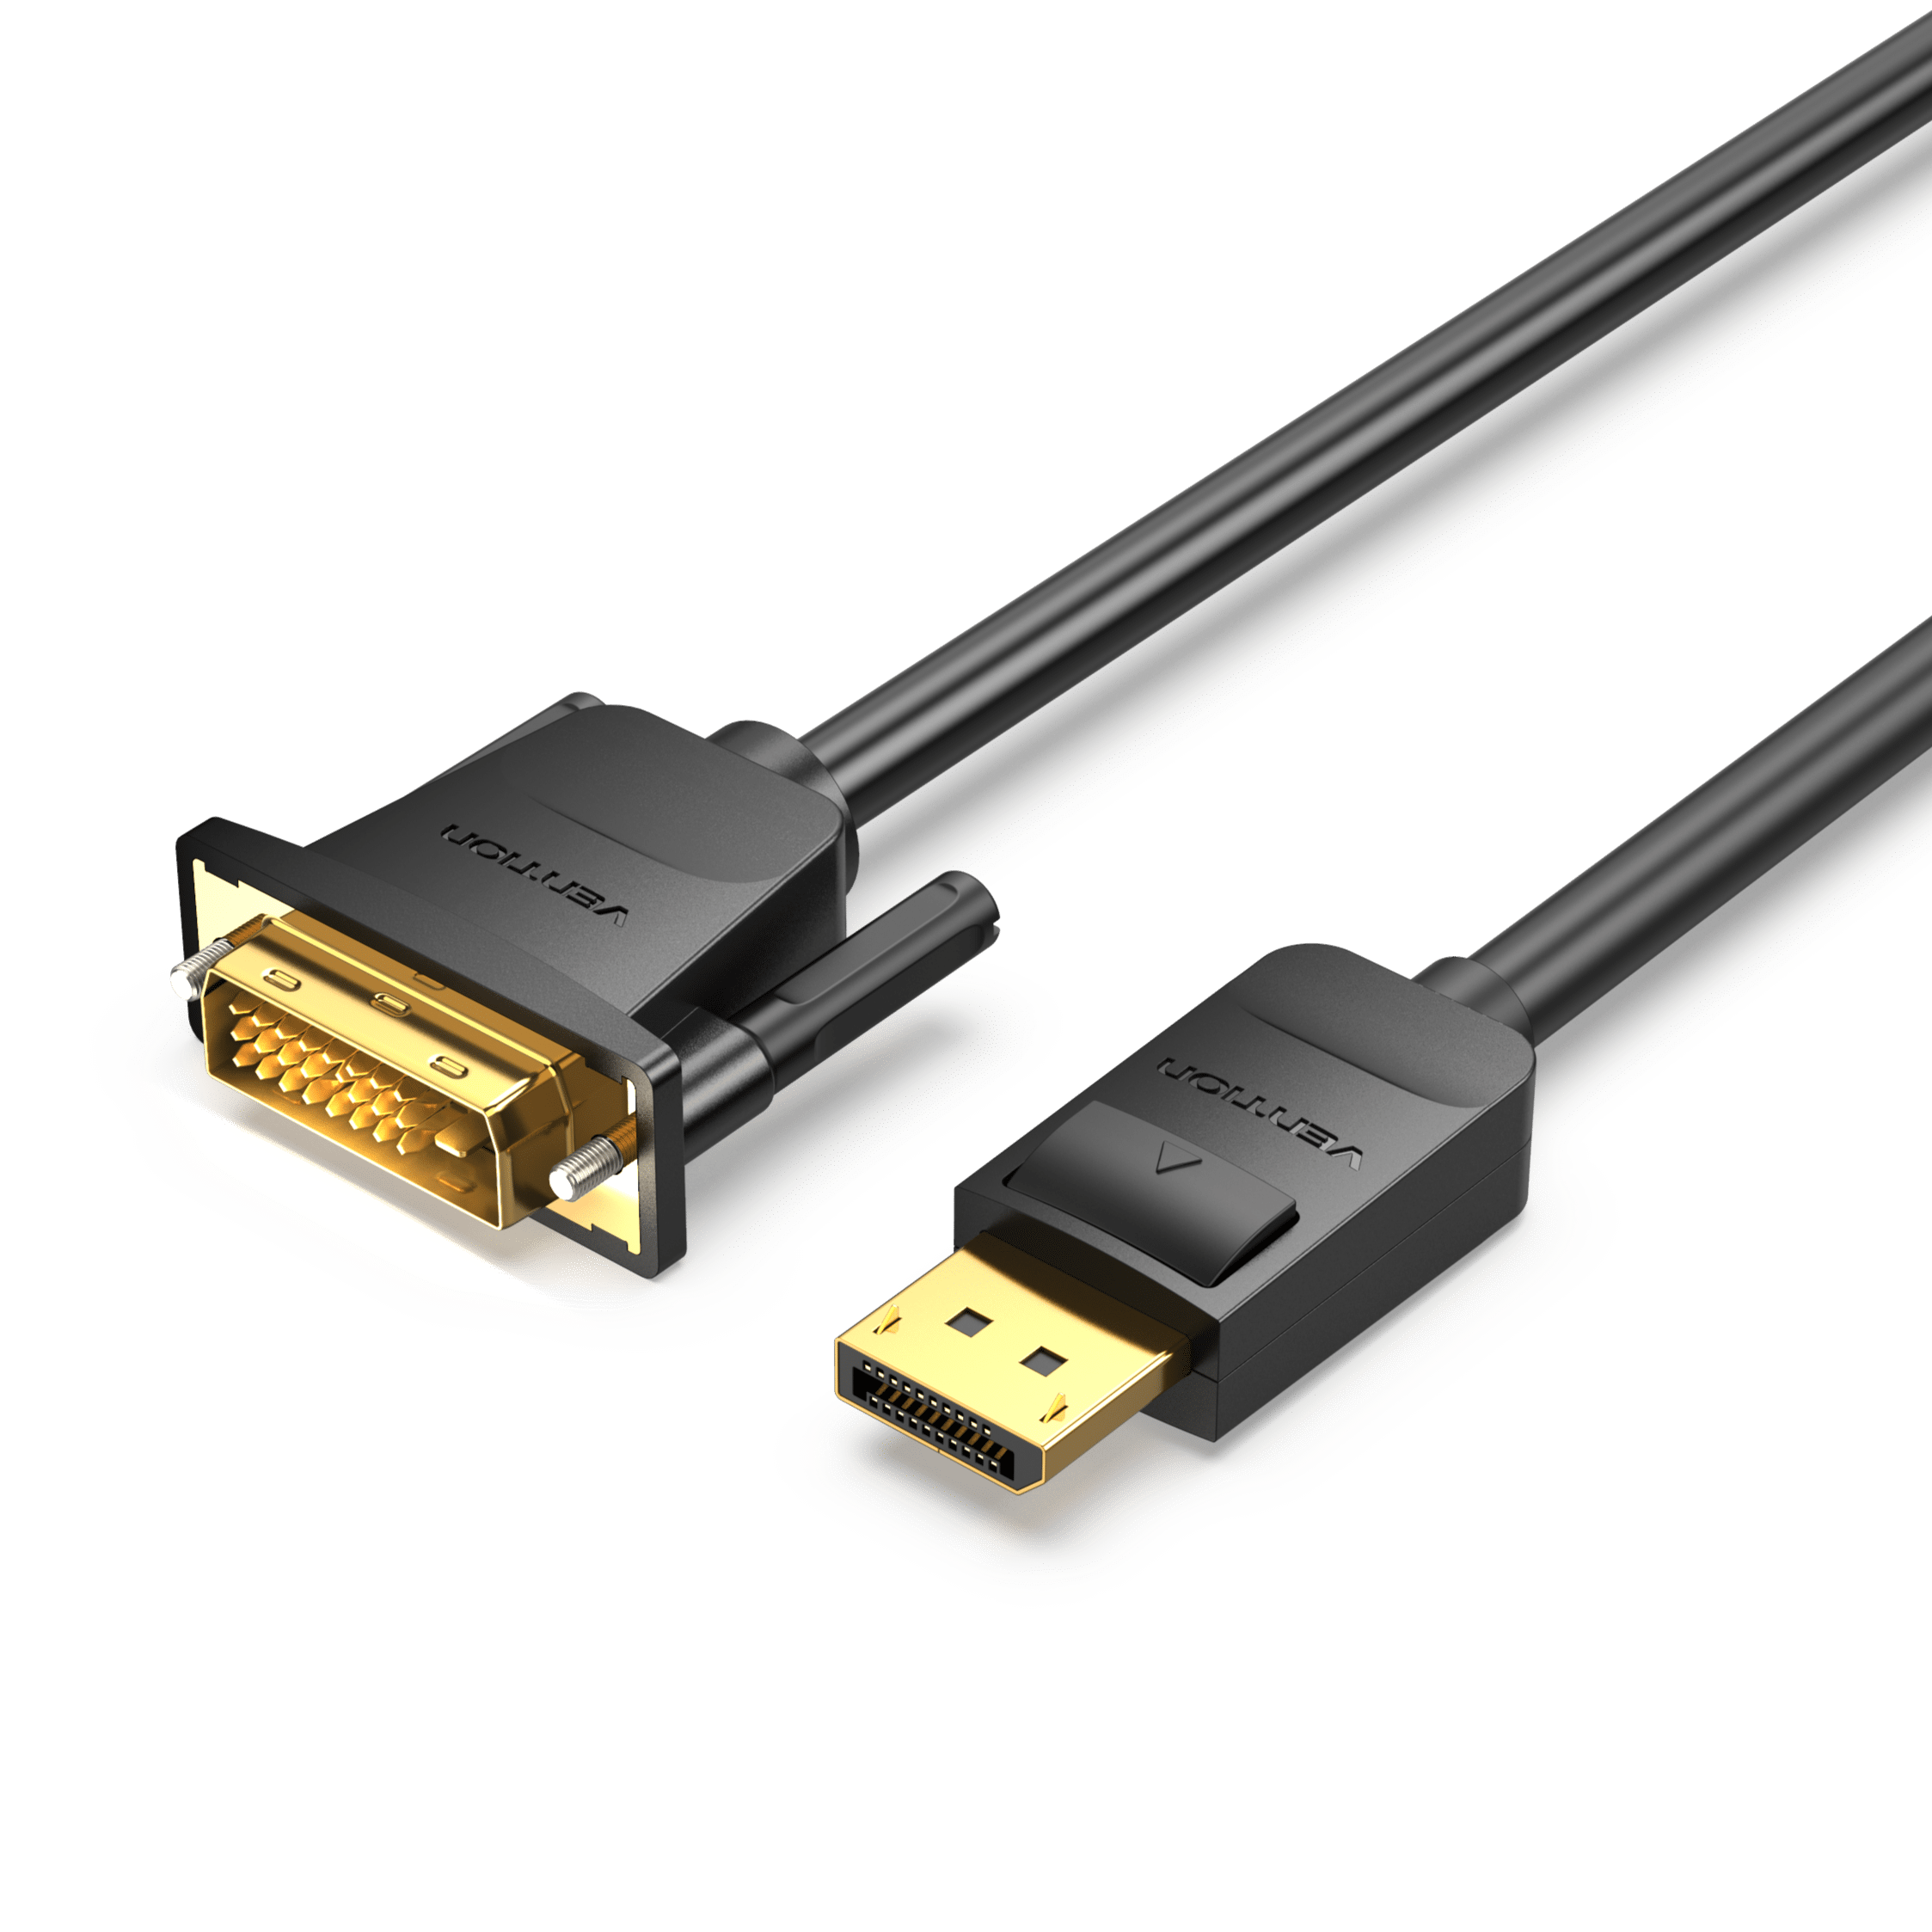 Convertisseur Adaptateur DVI-D mâle (24 + 1) vers VGA femelle